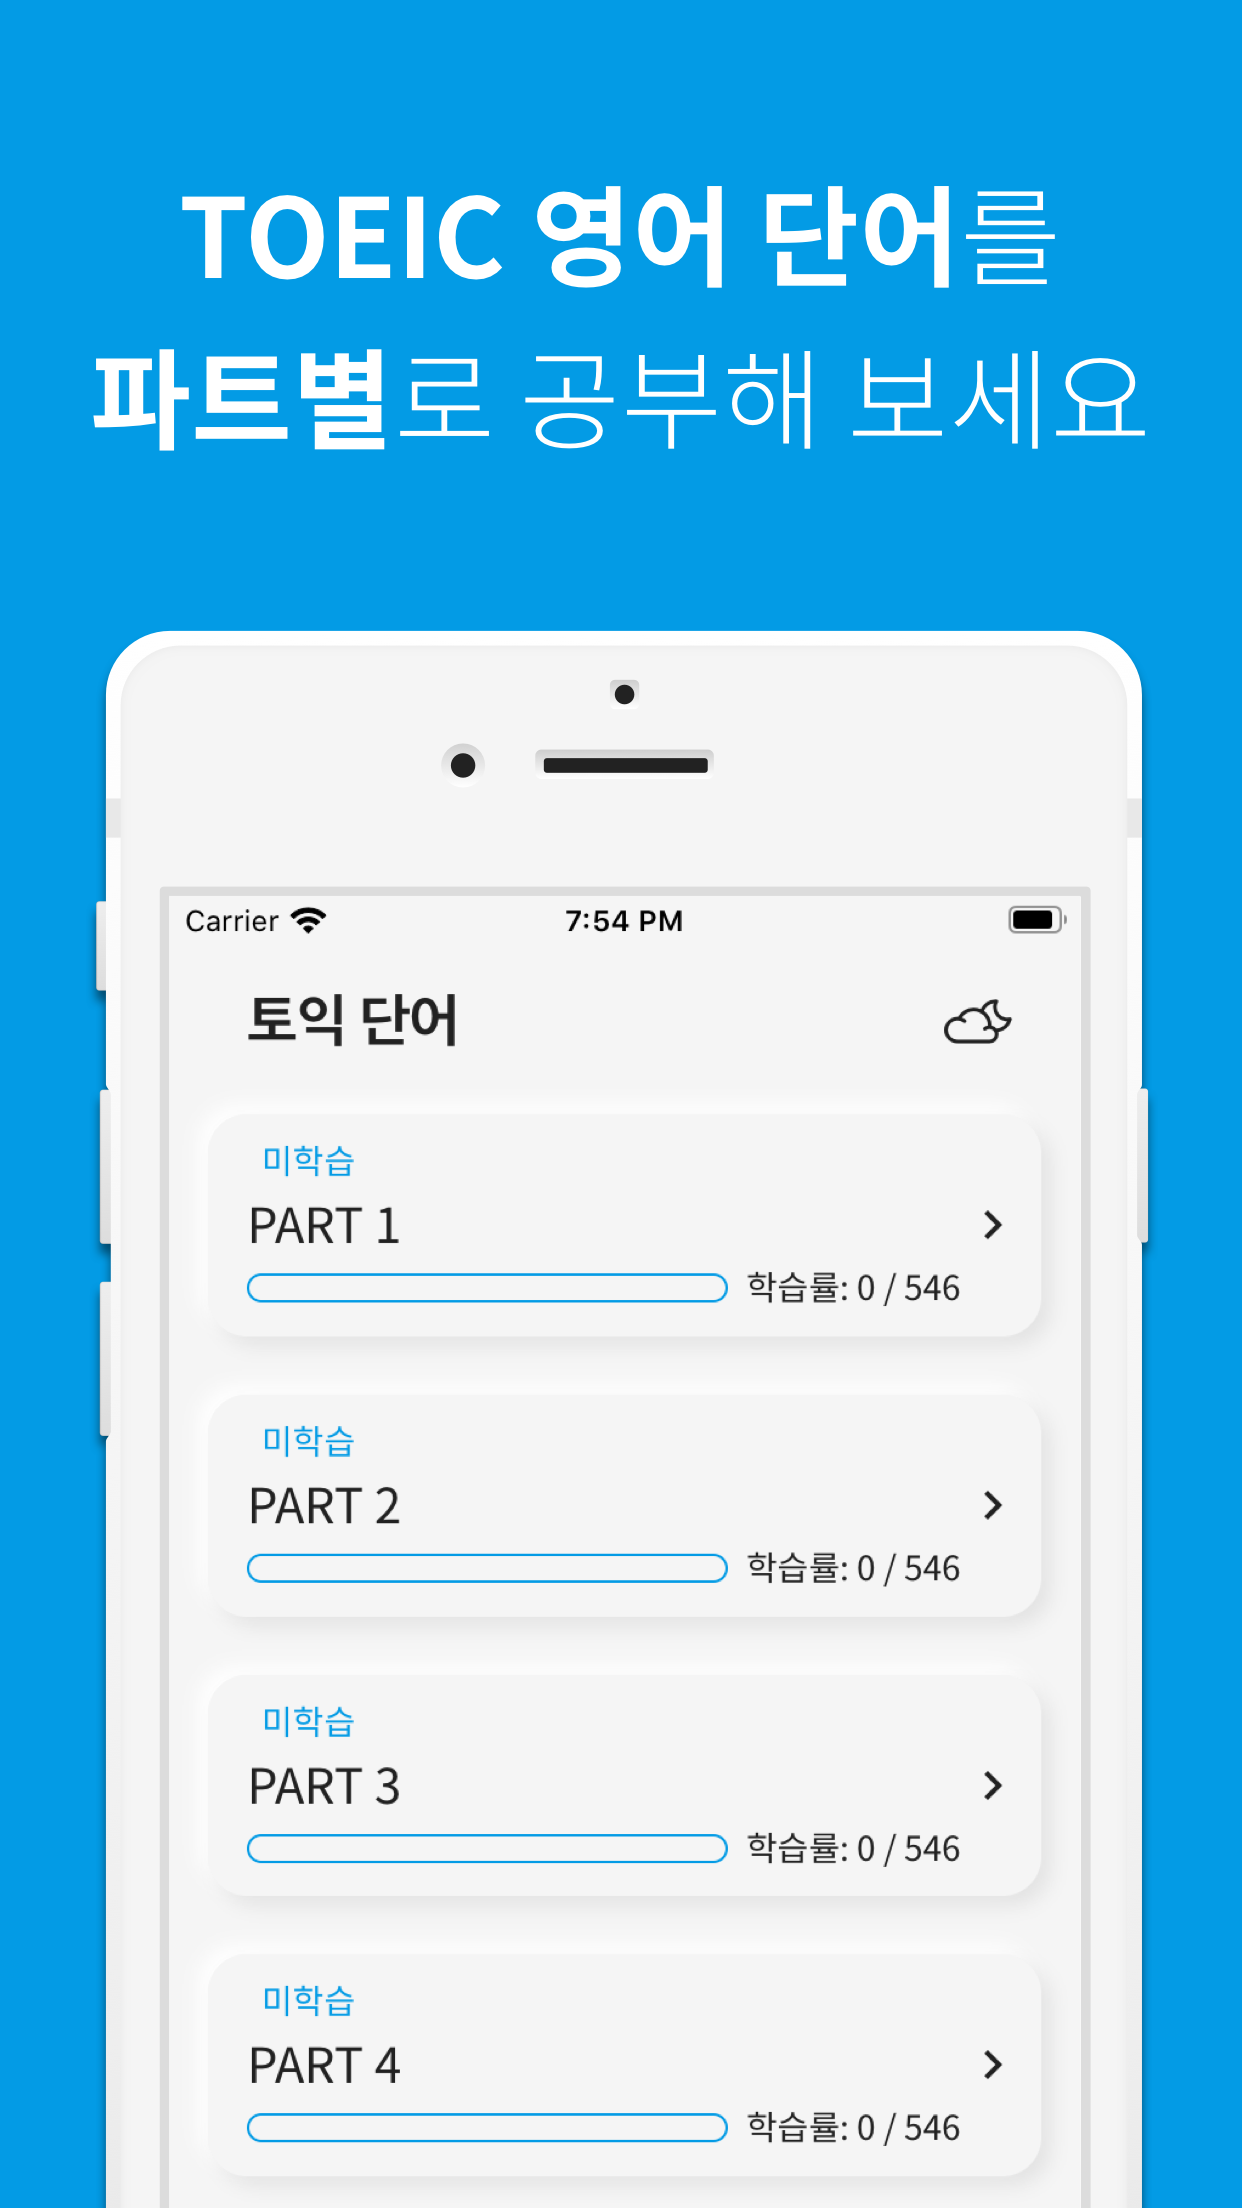 TOEIC 영어 단어앱 - 앱 스크린 샷1